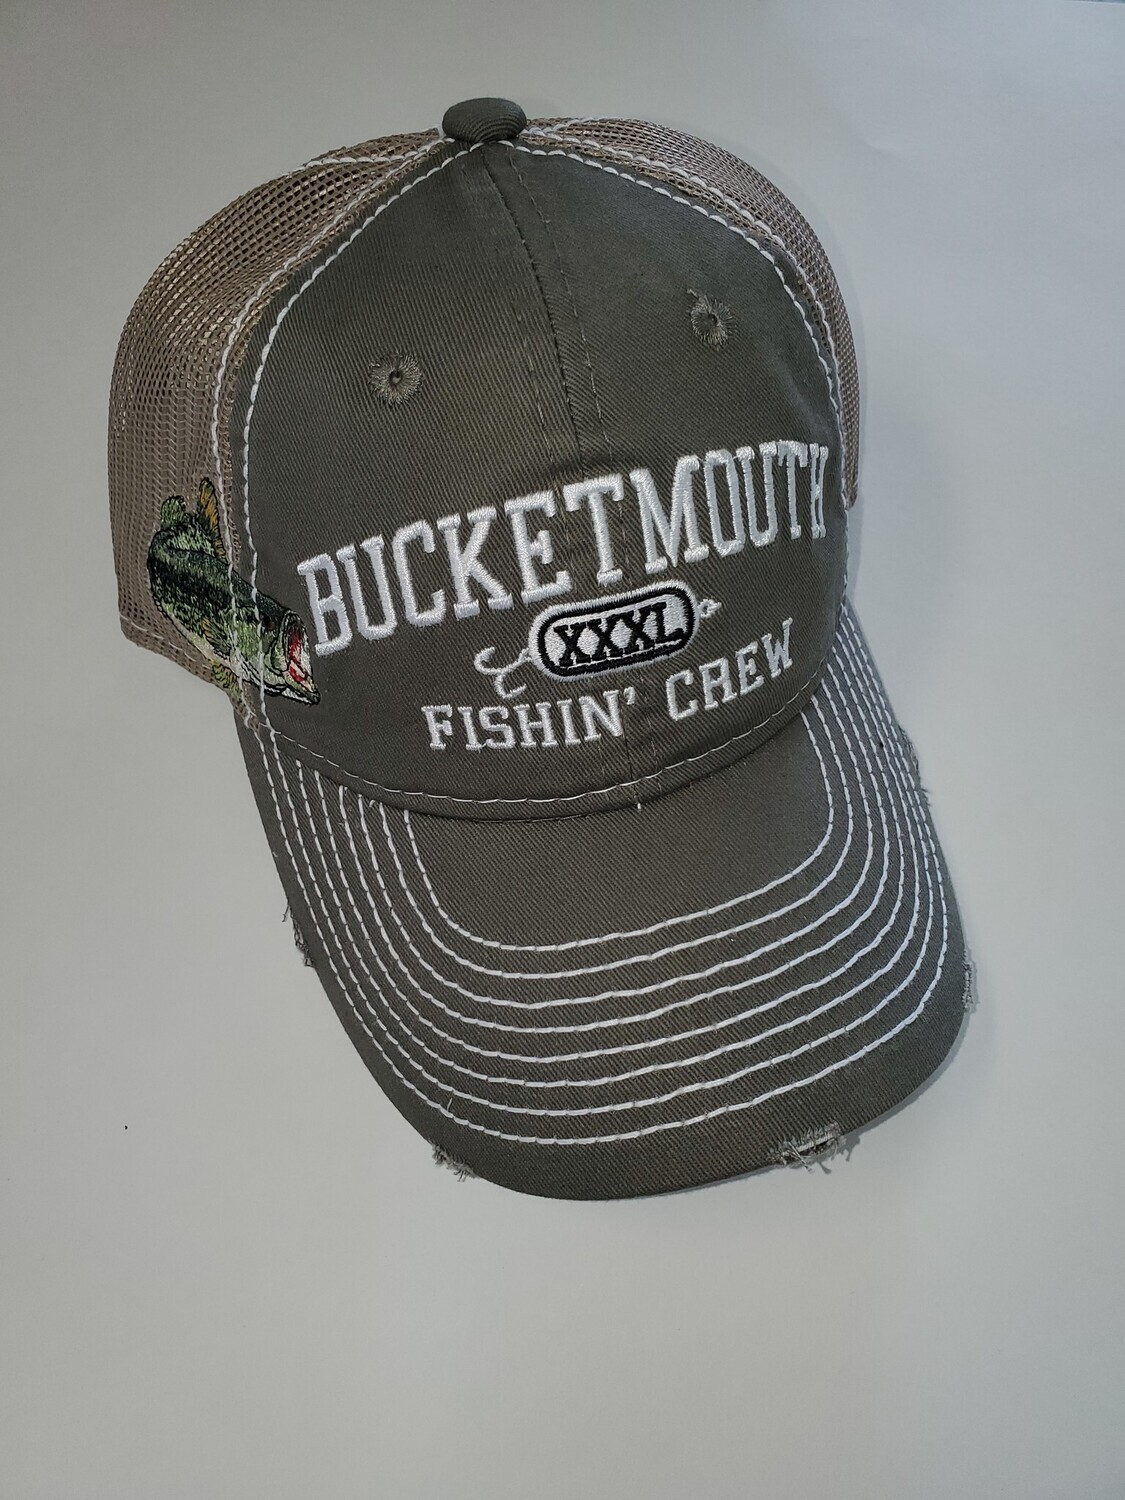 OCC "BUCKETMOUTH" CAP